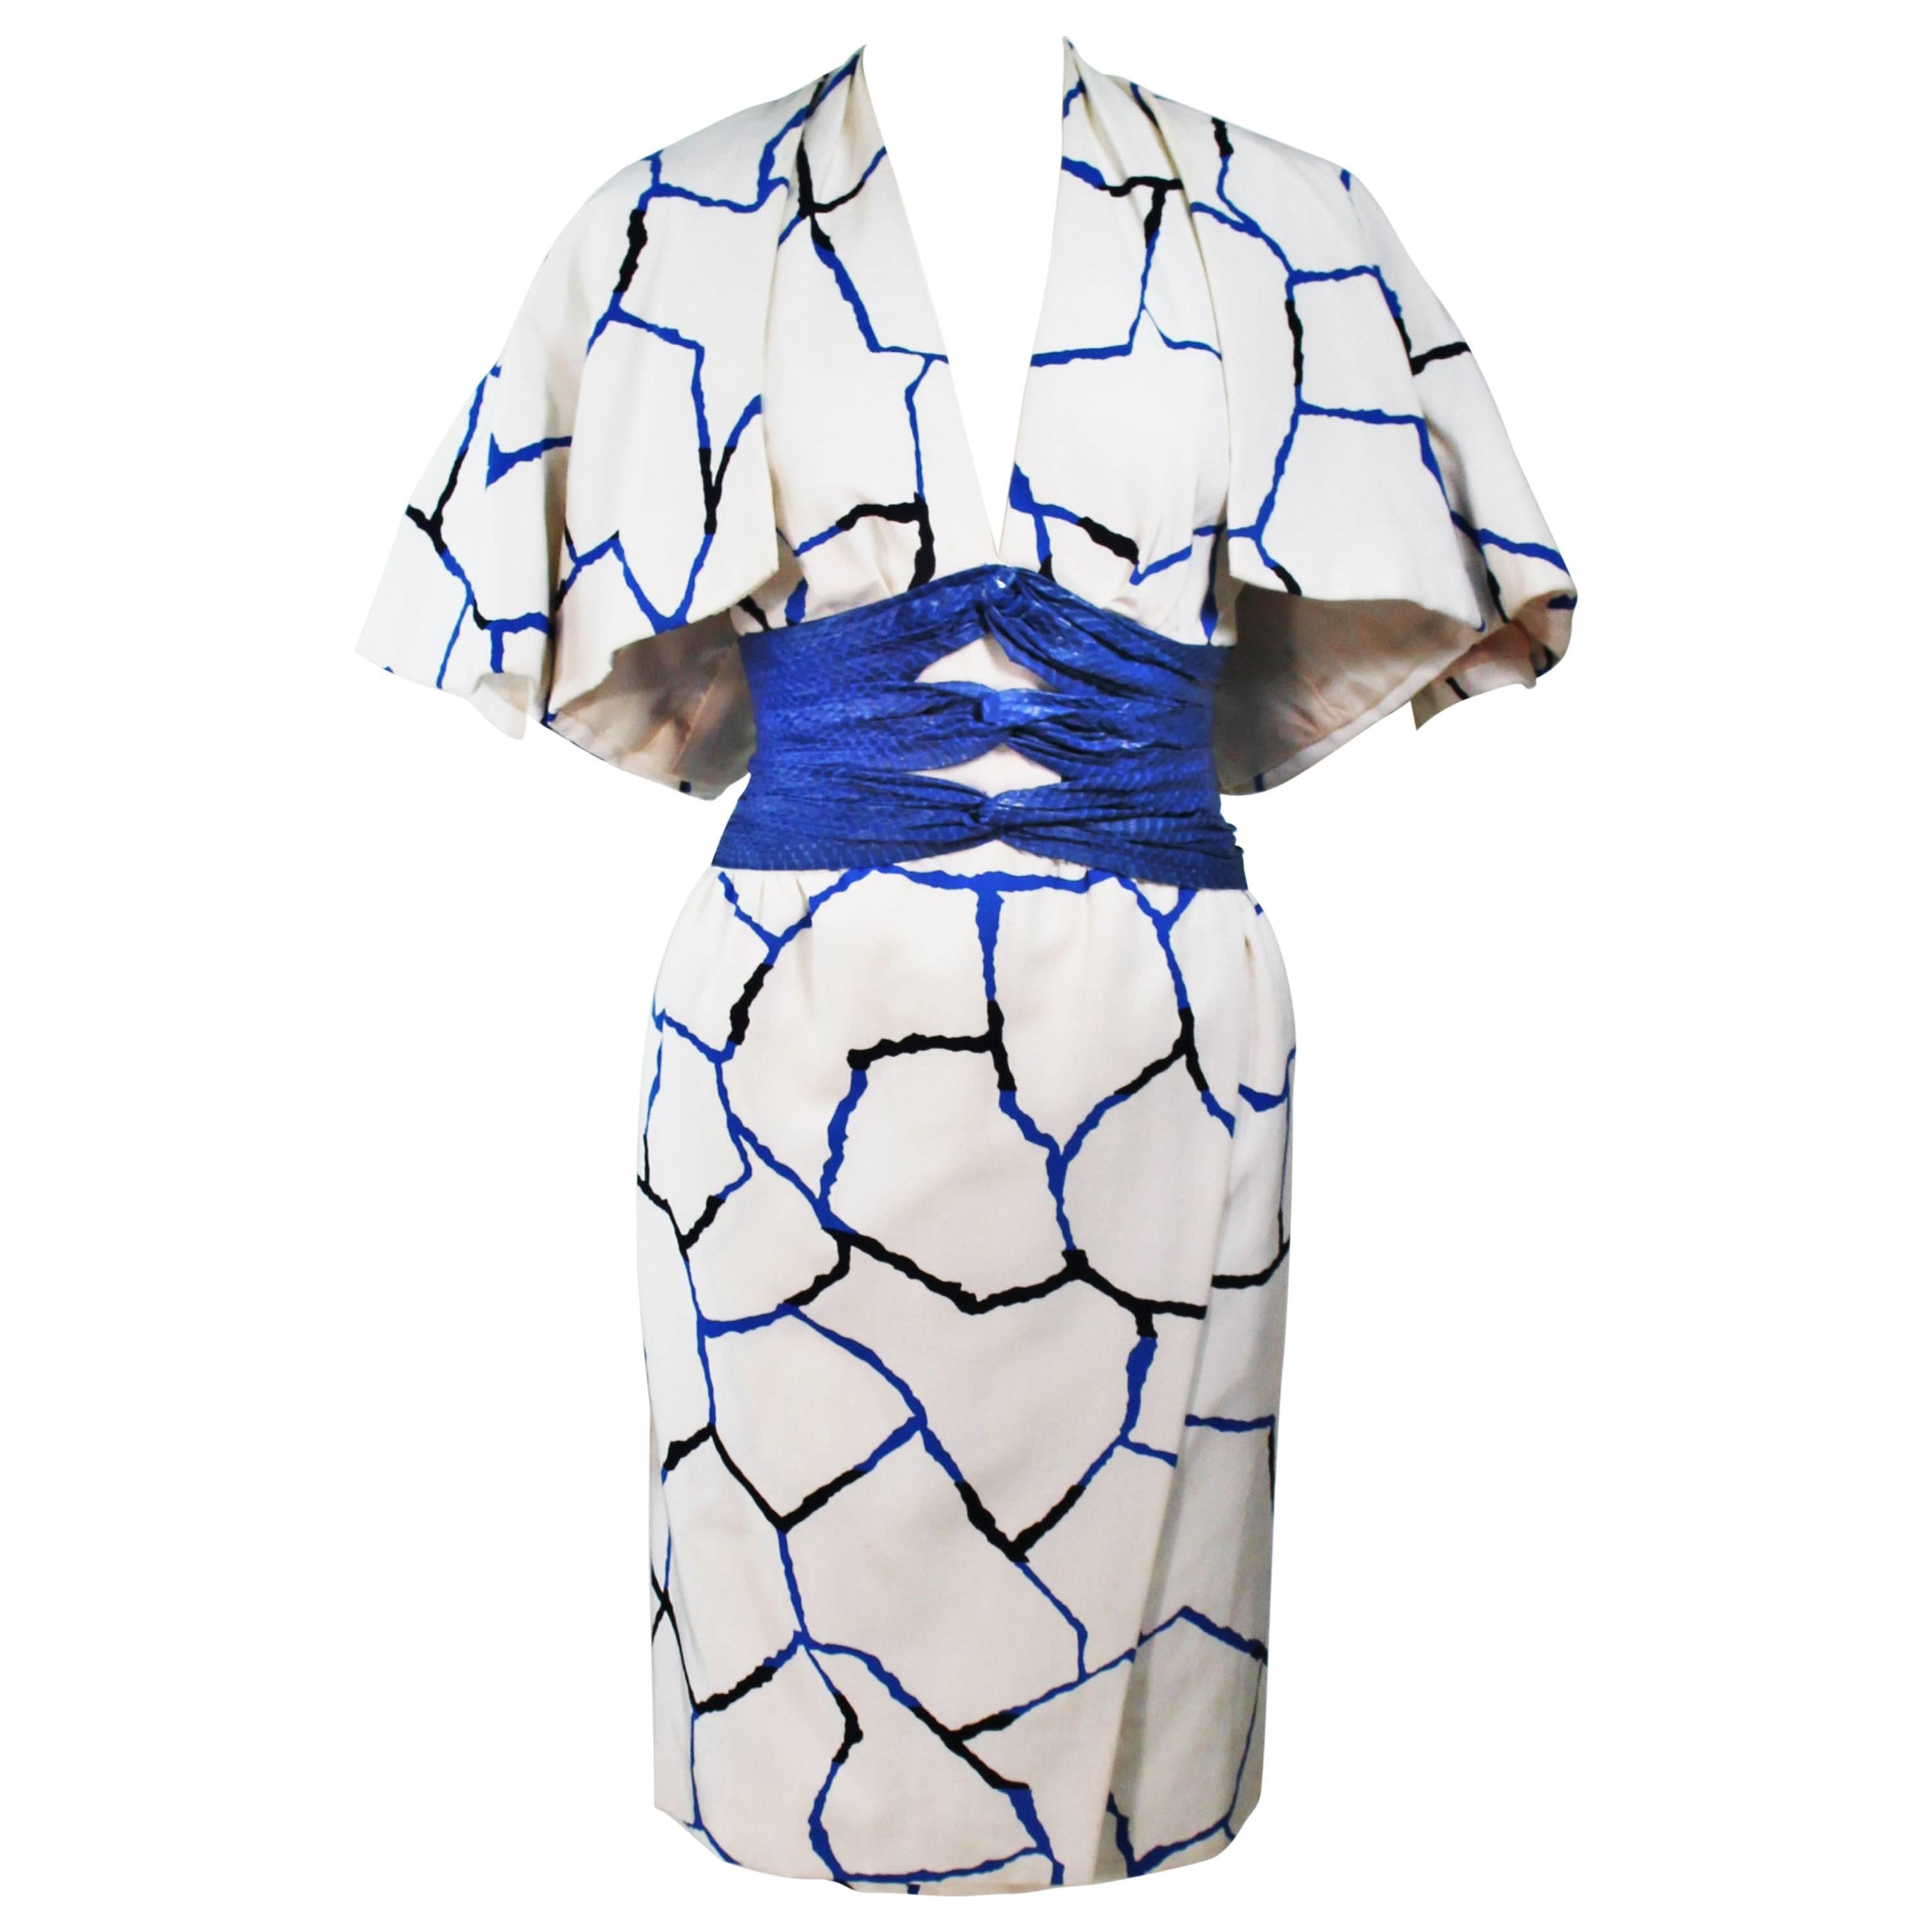 JACQUELINE DE RIBES Halter Dress with Cobalt Snakeskin Waist and Bolero Size 4-6 For Sale